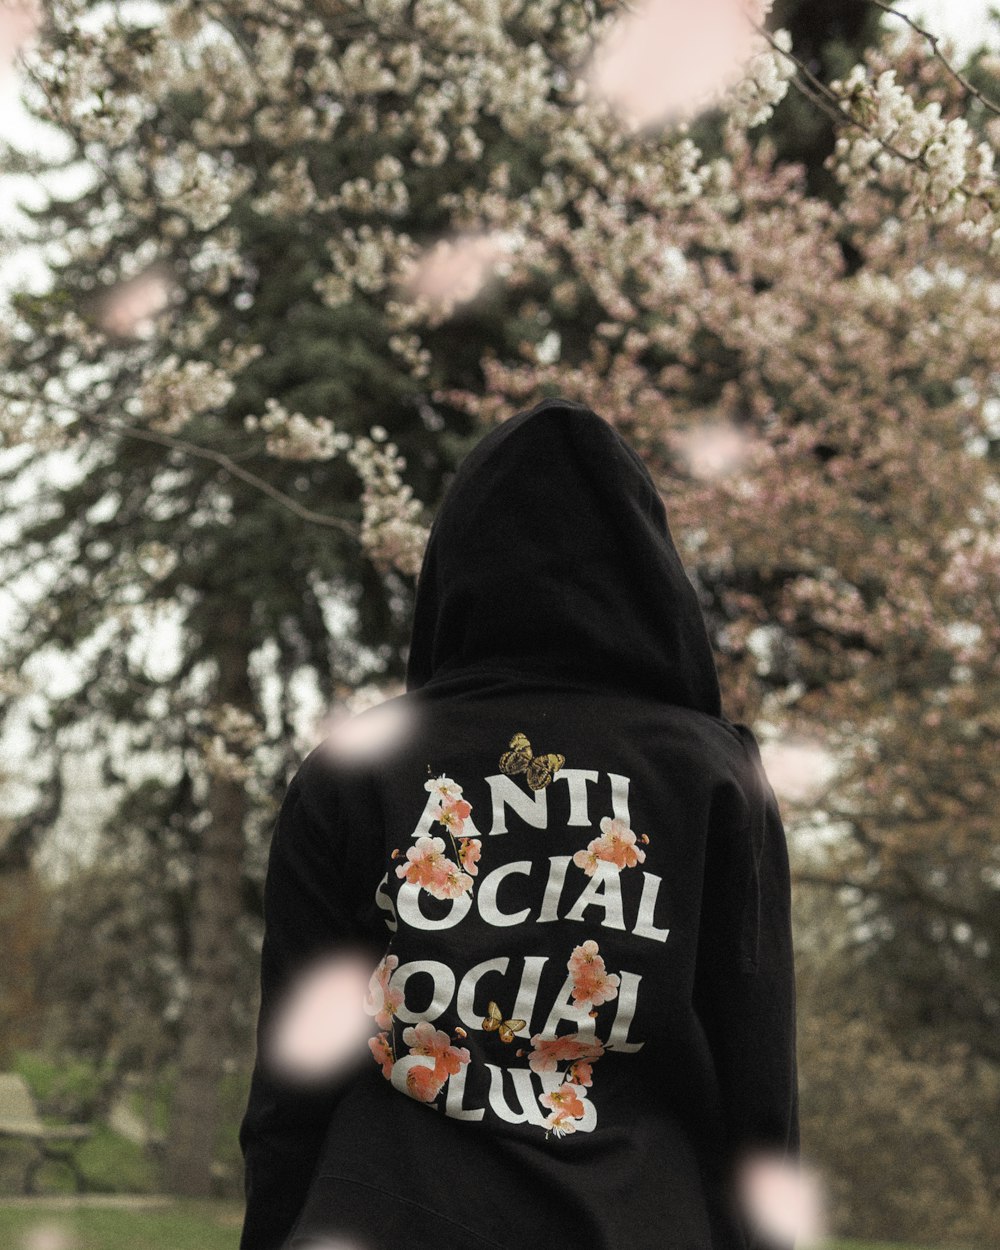 person wearing black and white Anti Social Club jacket photo – Free Apparel  Image on Unsplash